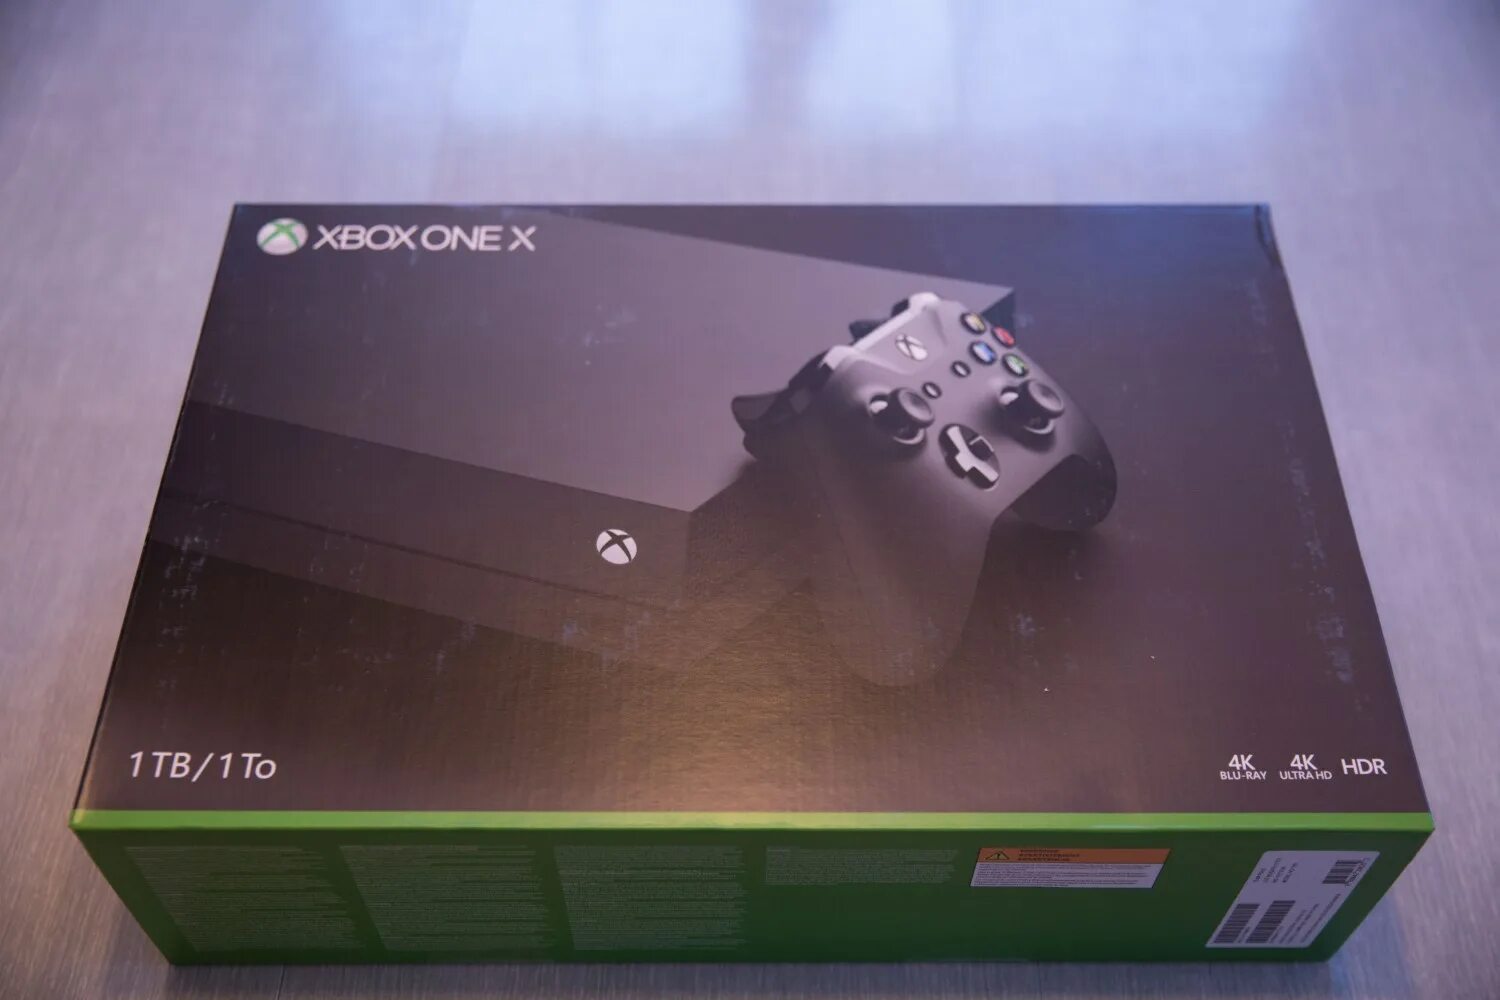 Xbox series коробка. Xbox one x 1tb. Xbox Series s коробка Ростест. Xbox one x 2tb коробка. Xbox Series х 1tb.